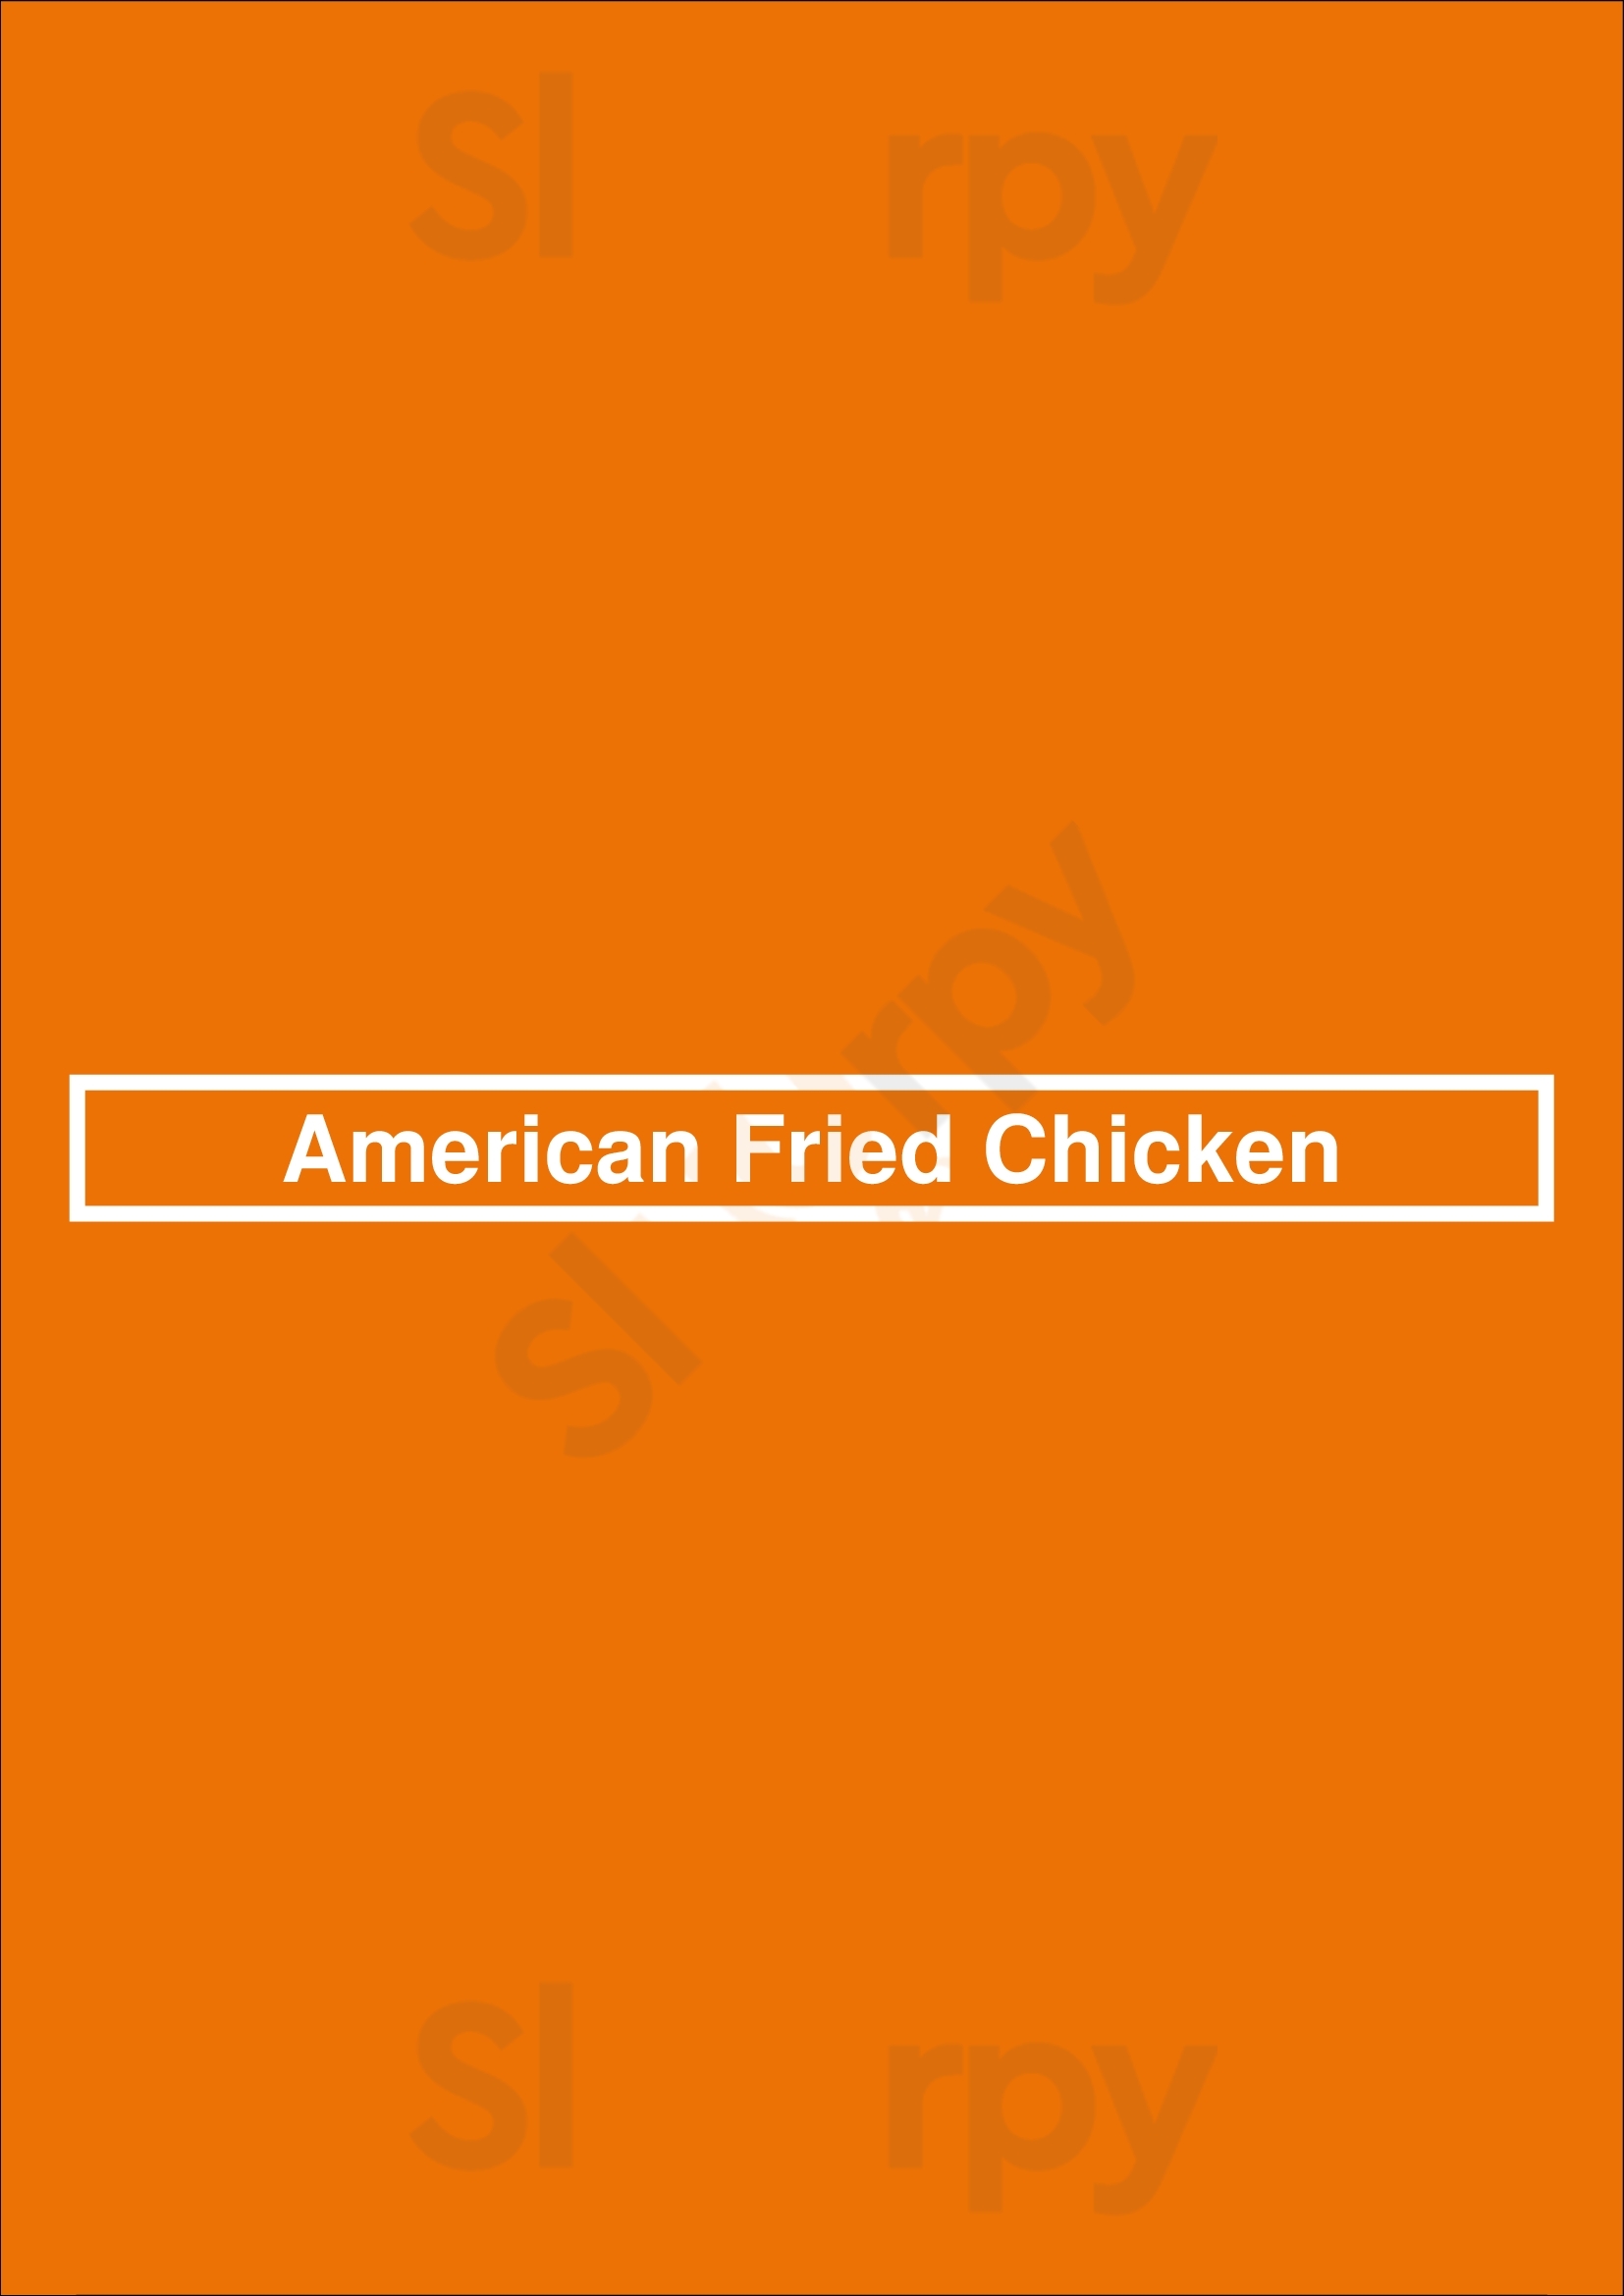 American Fried Chicken Leicester Menu - 1